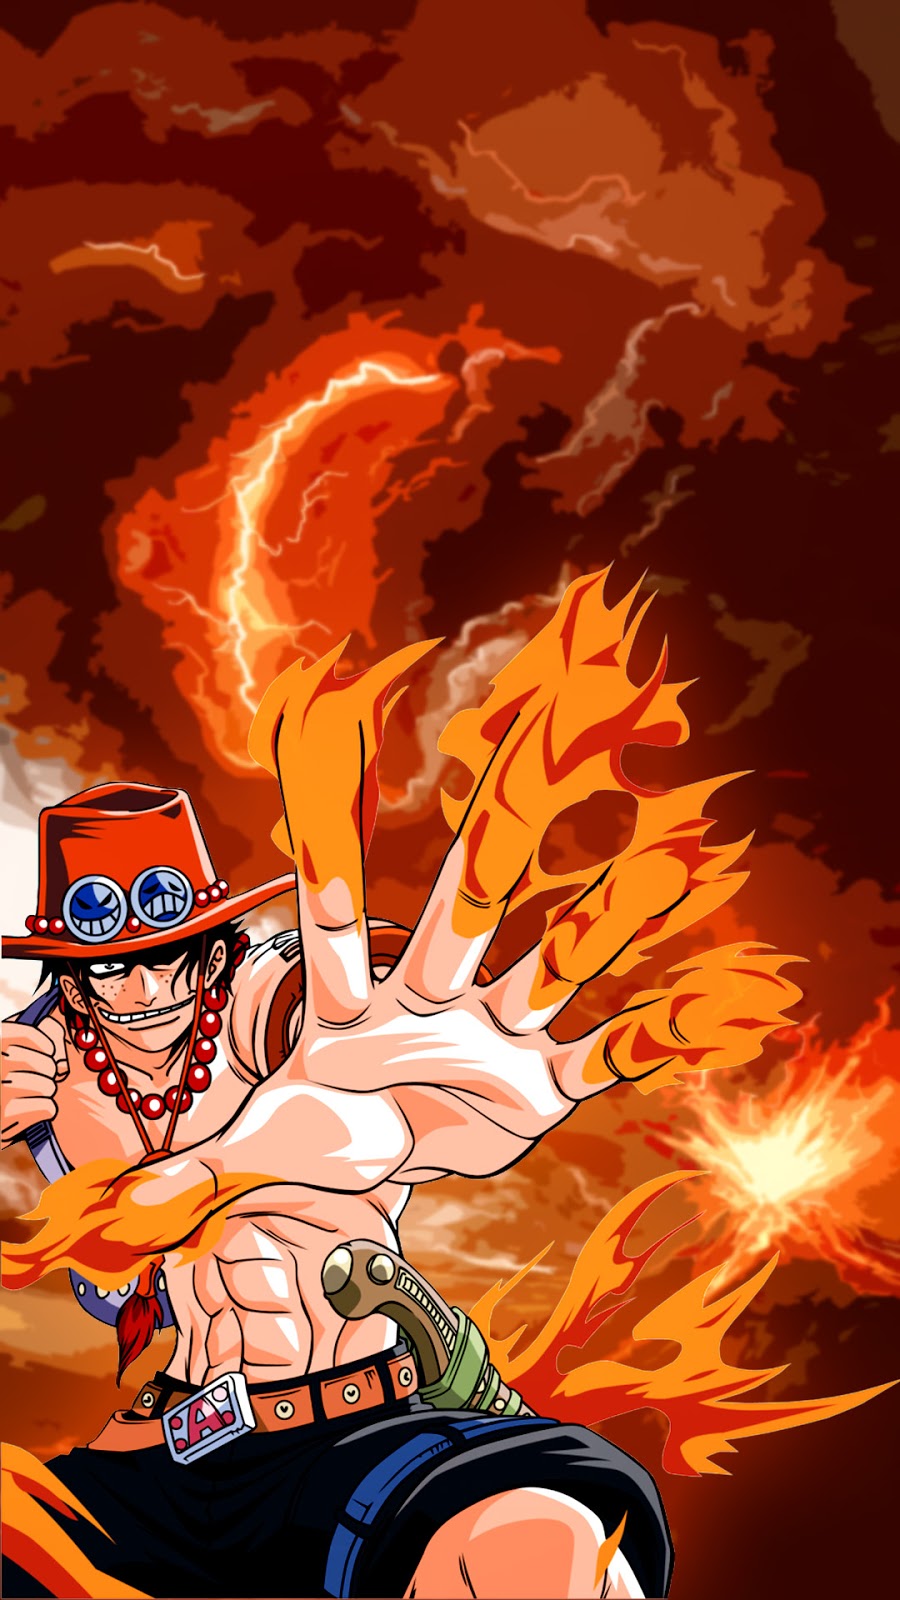 Animasi Anime Wallpaper Lucu One Piece Gambar Keren ...